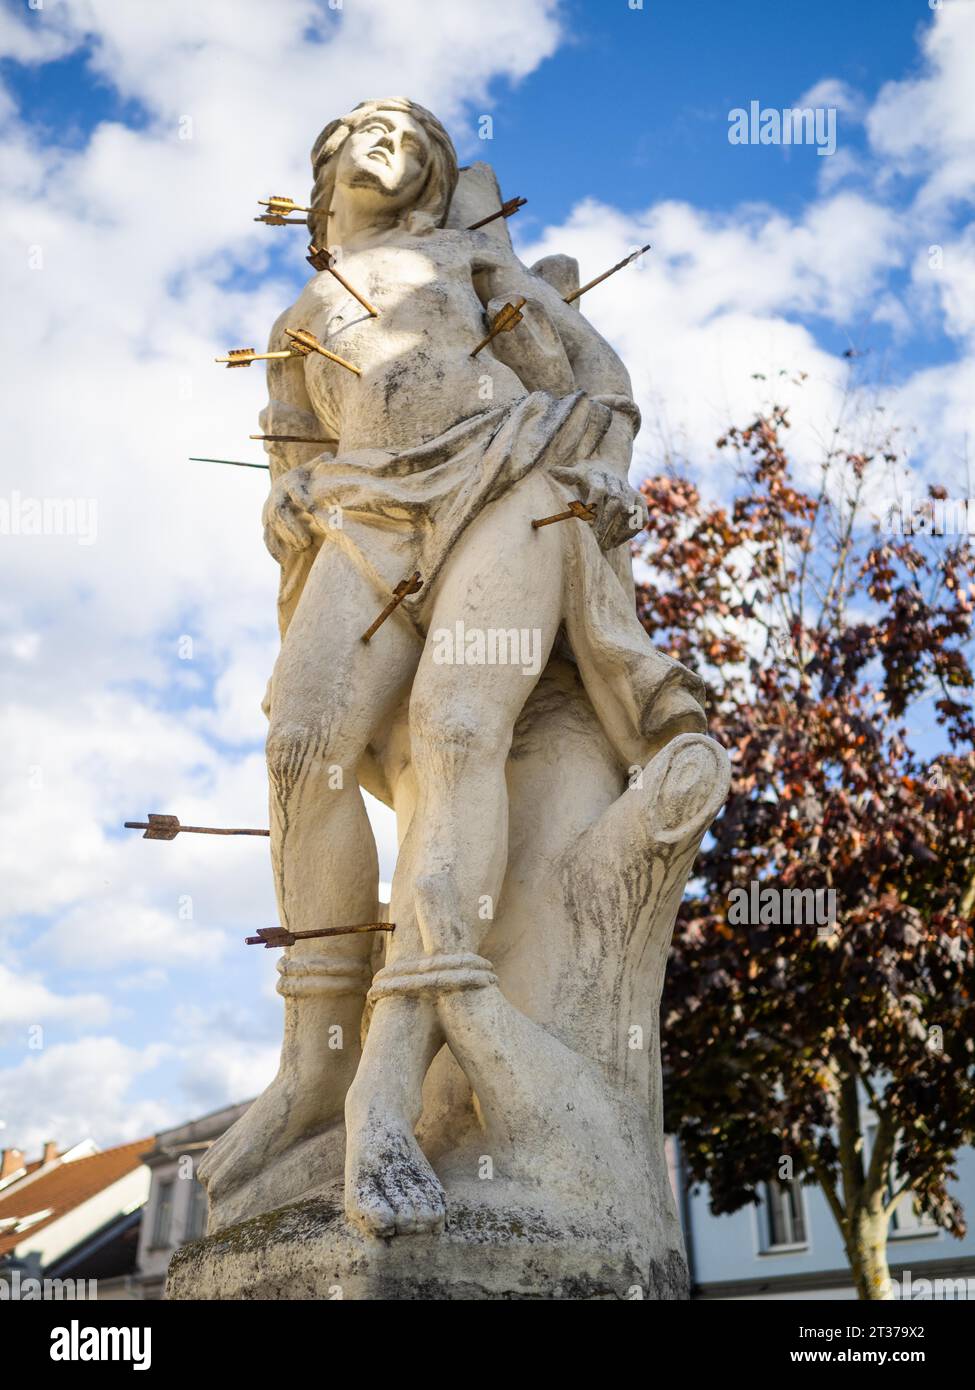 Figure of a saint, sculpture, Saint Sebastian, detail from the plague column column on the main square, Bruck an der Mur, Styria, Austria Stock Photo